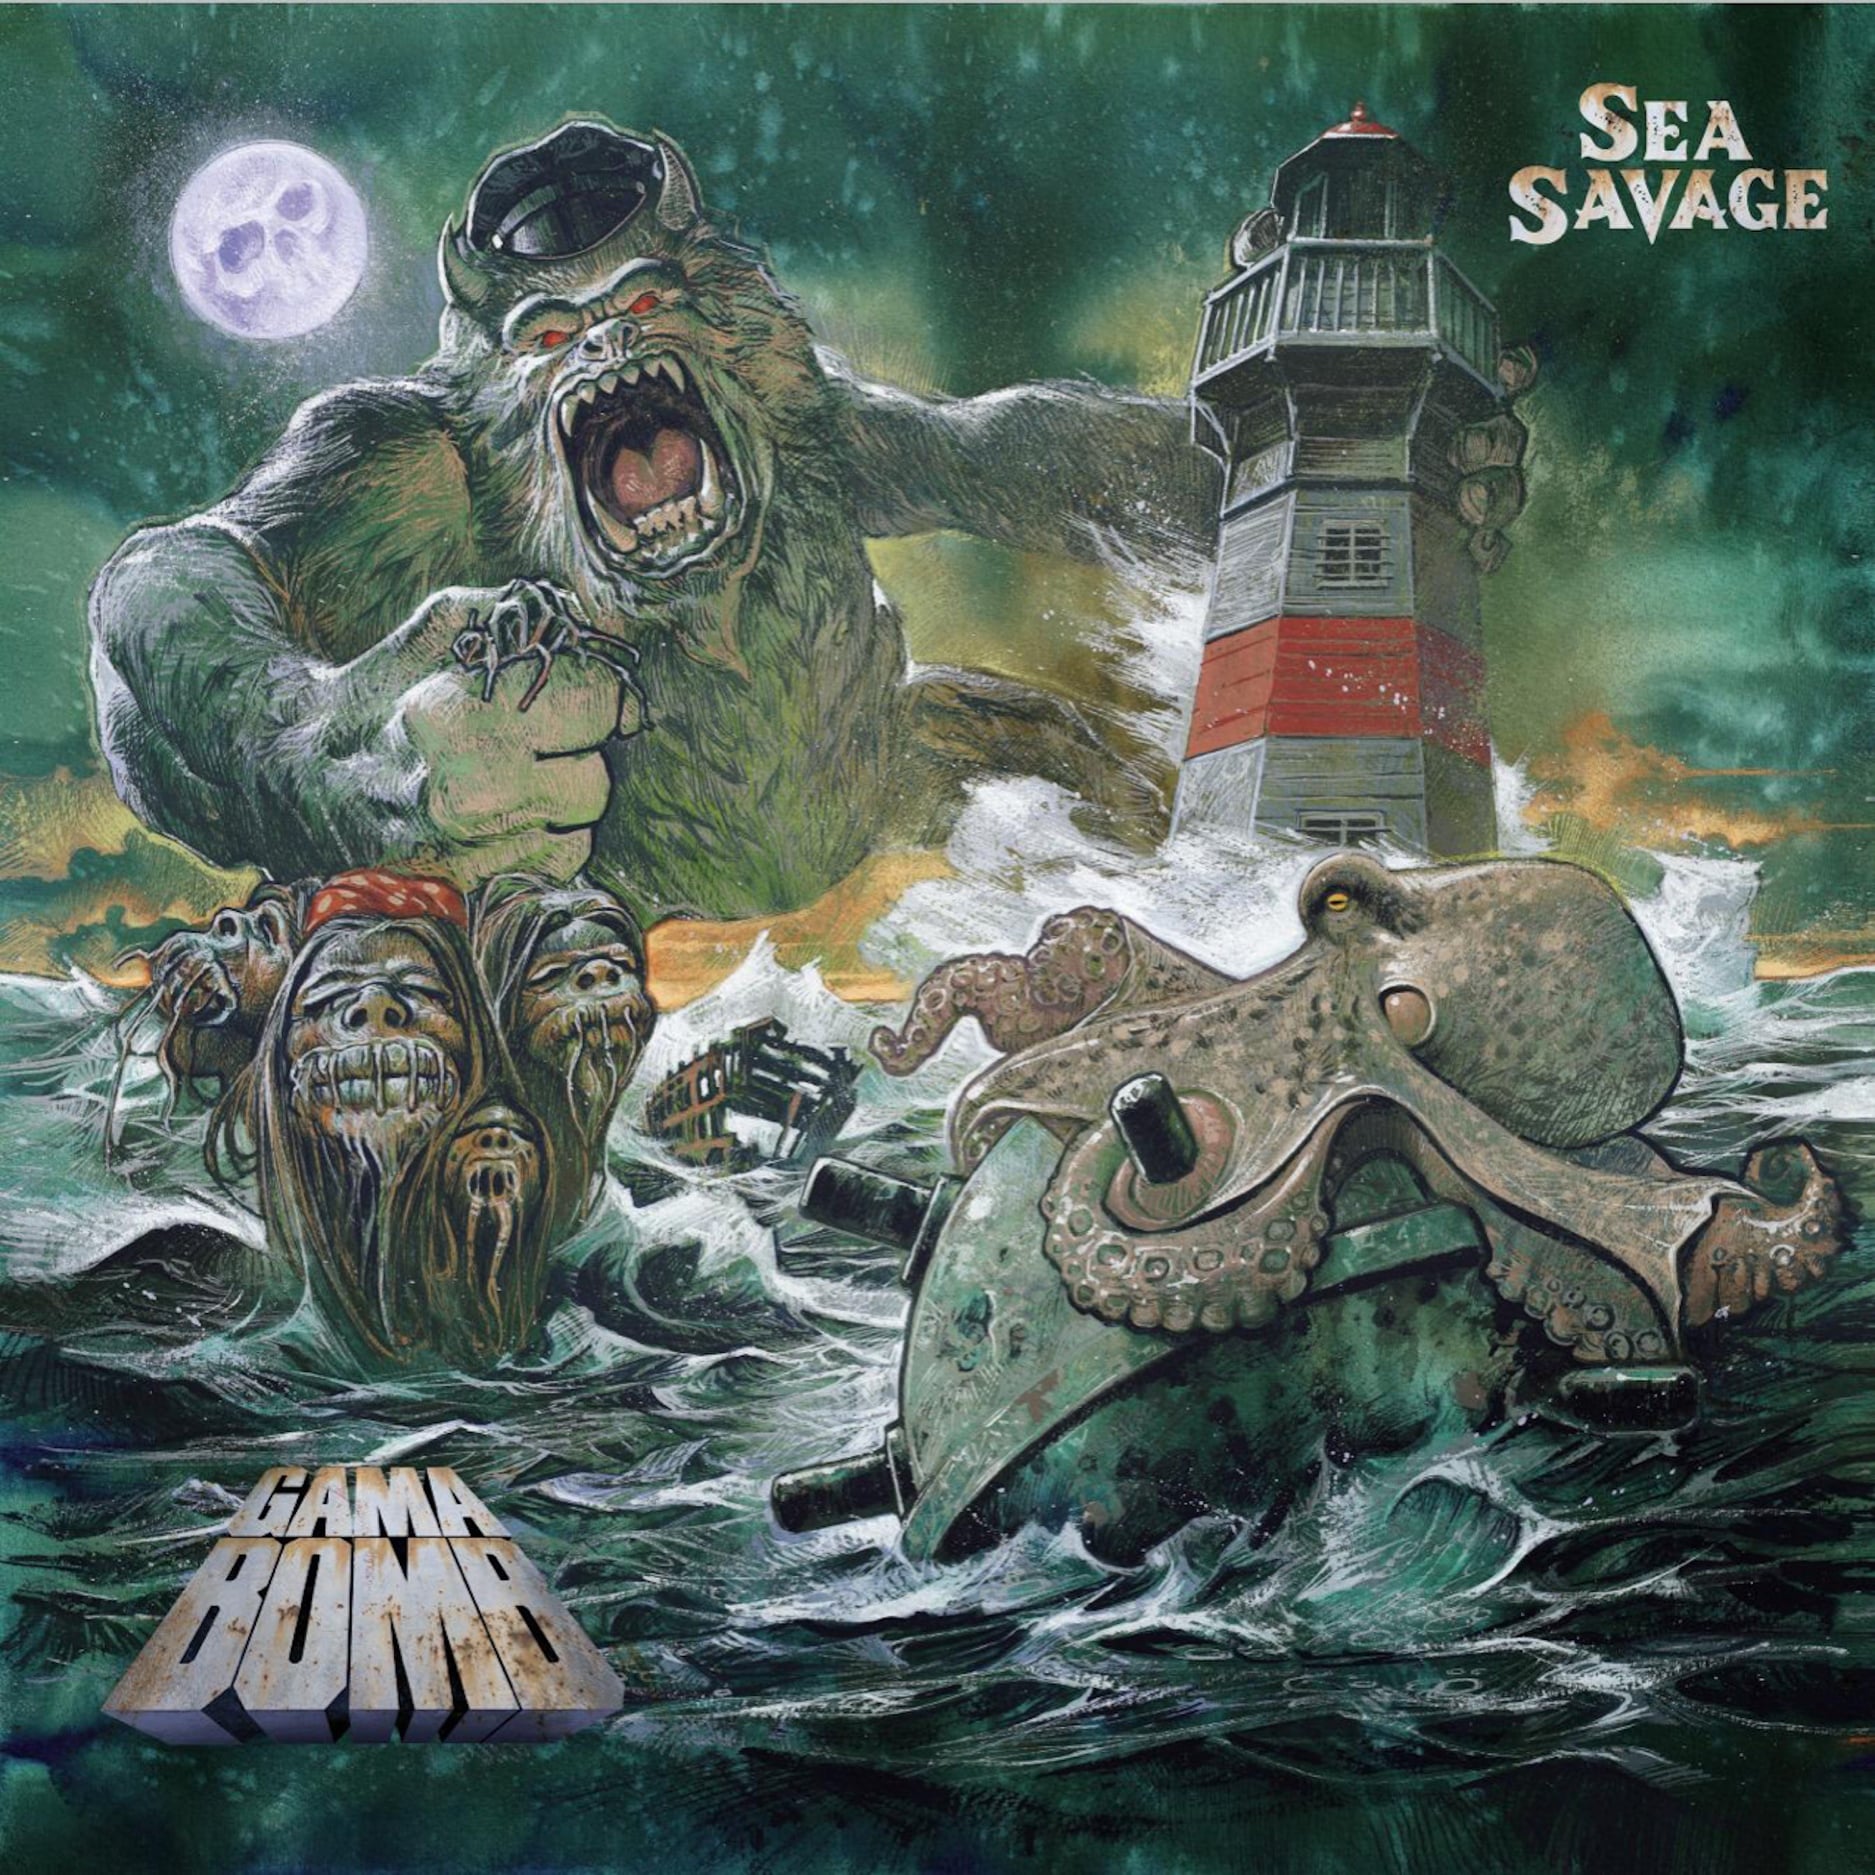 Gama Bomb – Sea Savage